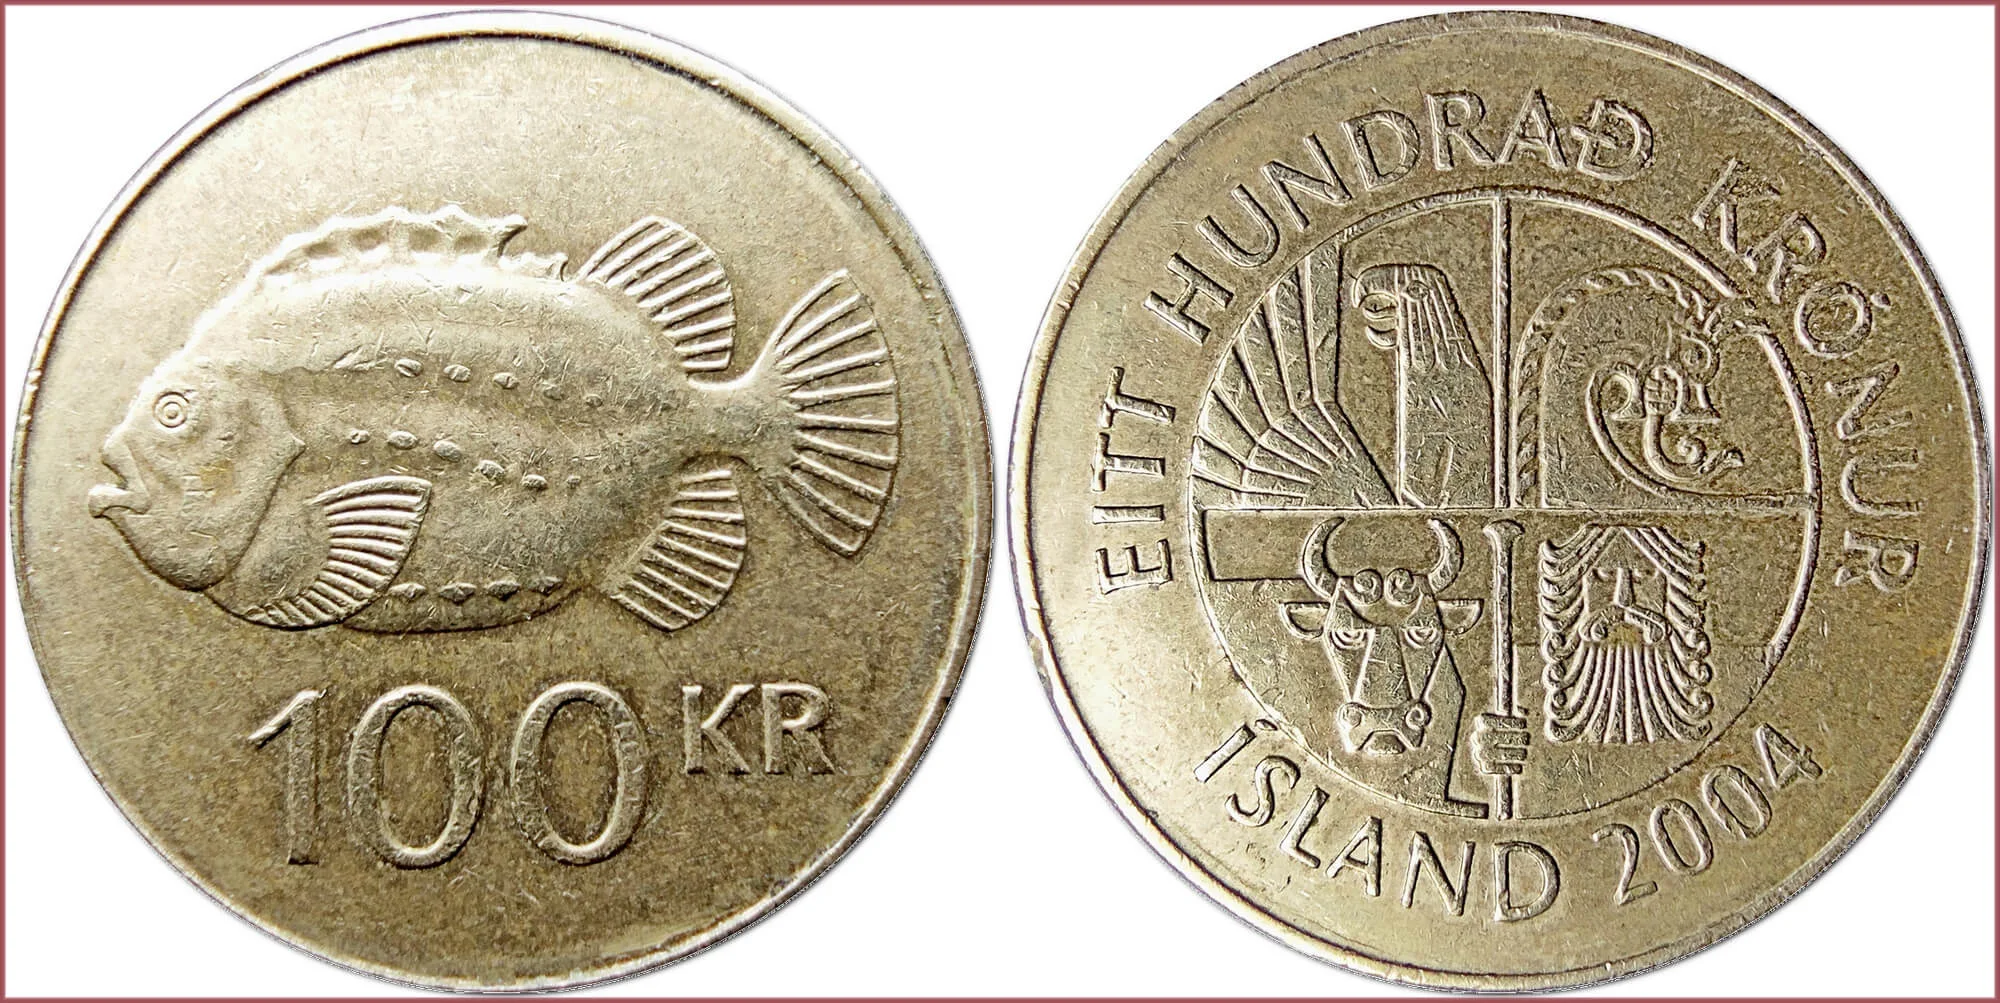 100 krónur, 2004: Iceland